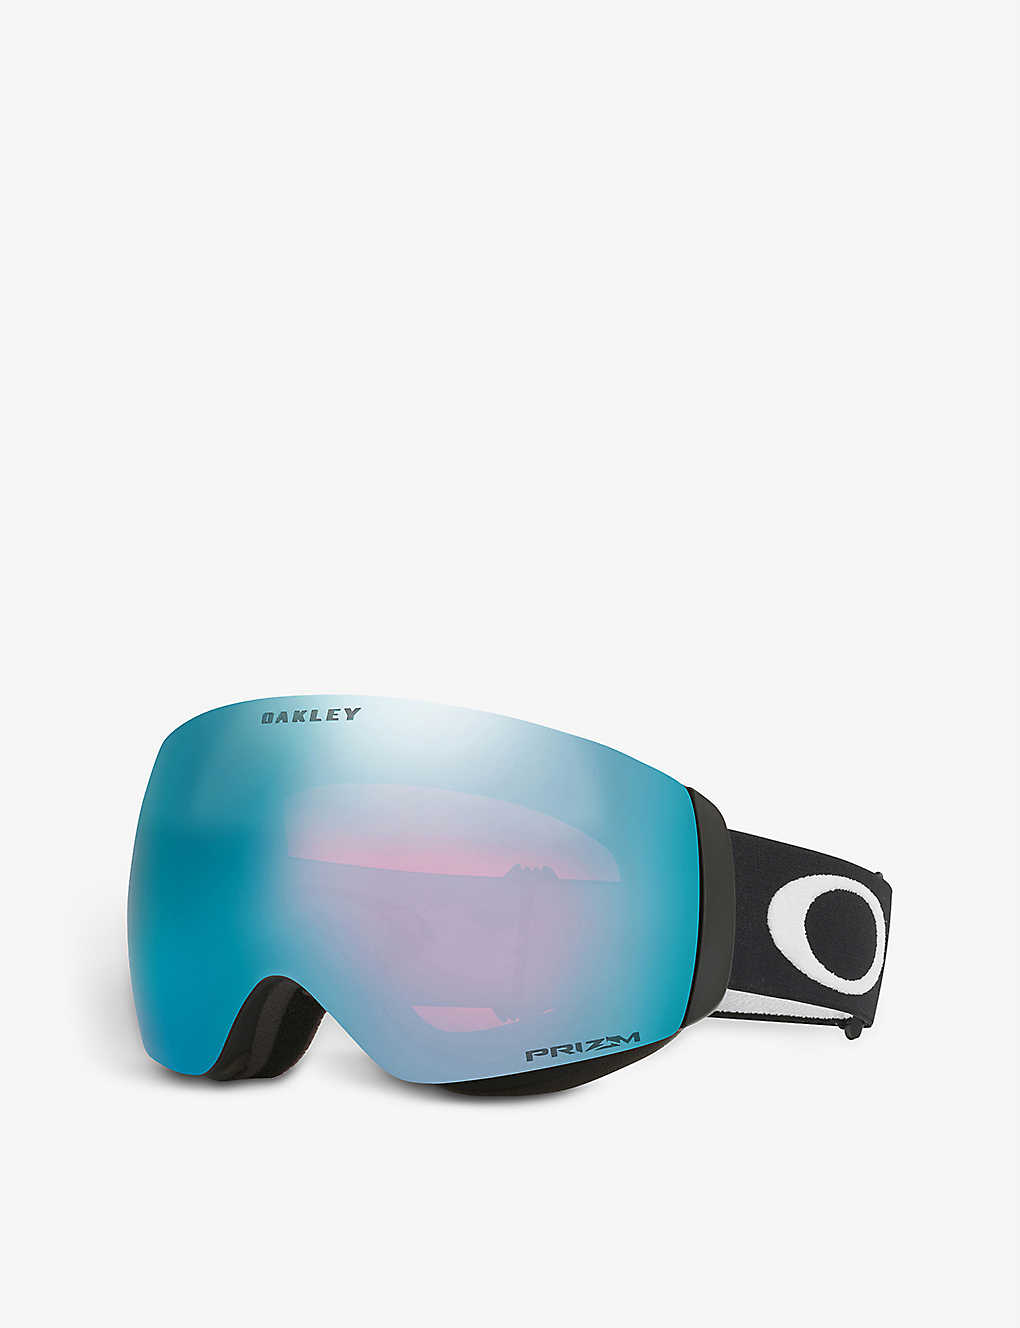 OO7064-41 Flight Deck XM rectangle-frame acetate Prizm ski goggles Selfridges & Co Men Sport & Swimwear Skiwear Ski Accessories 